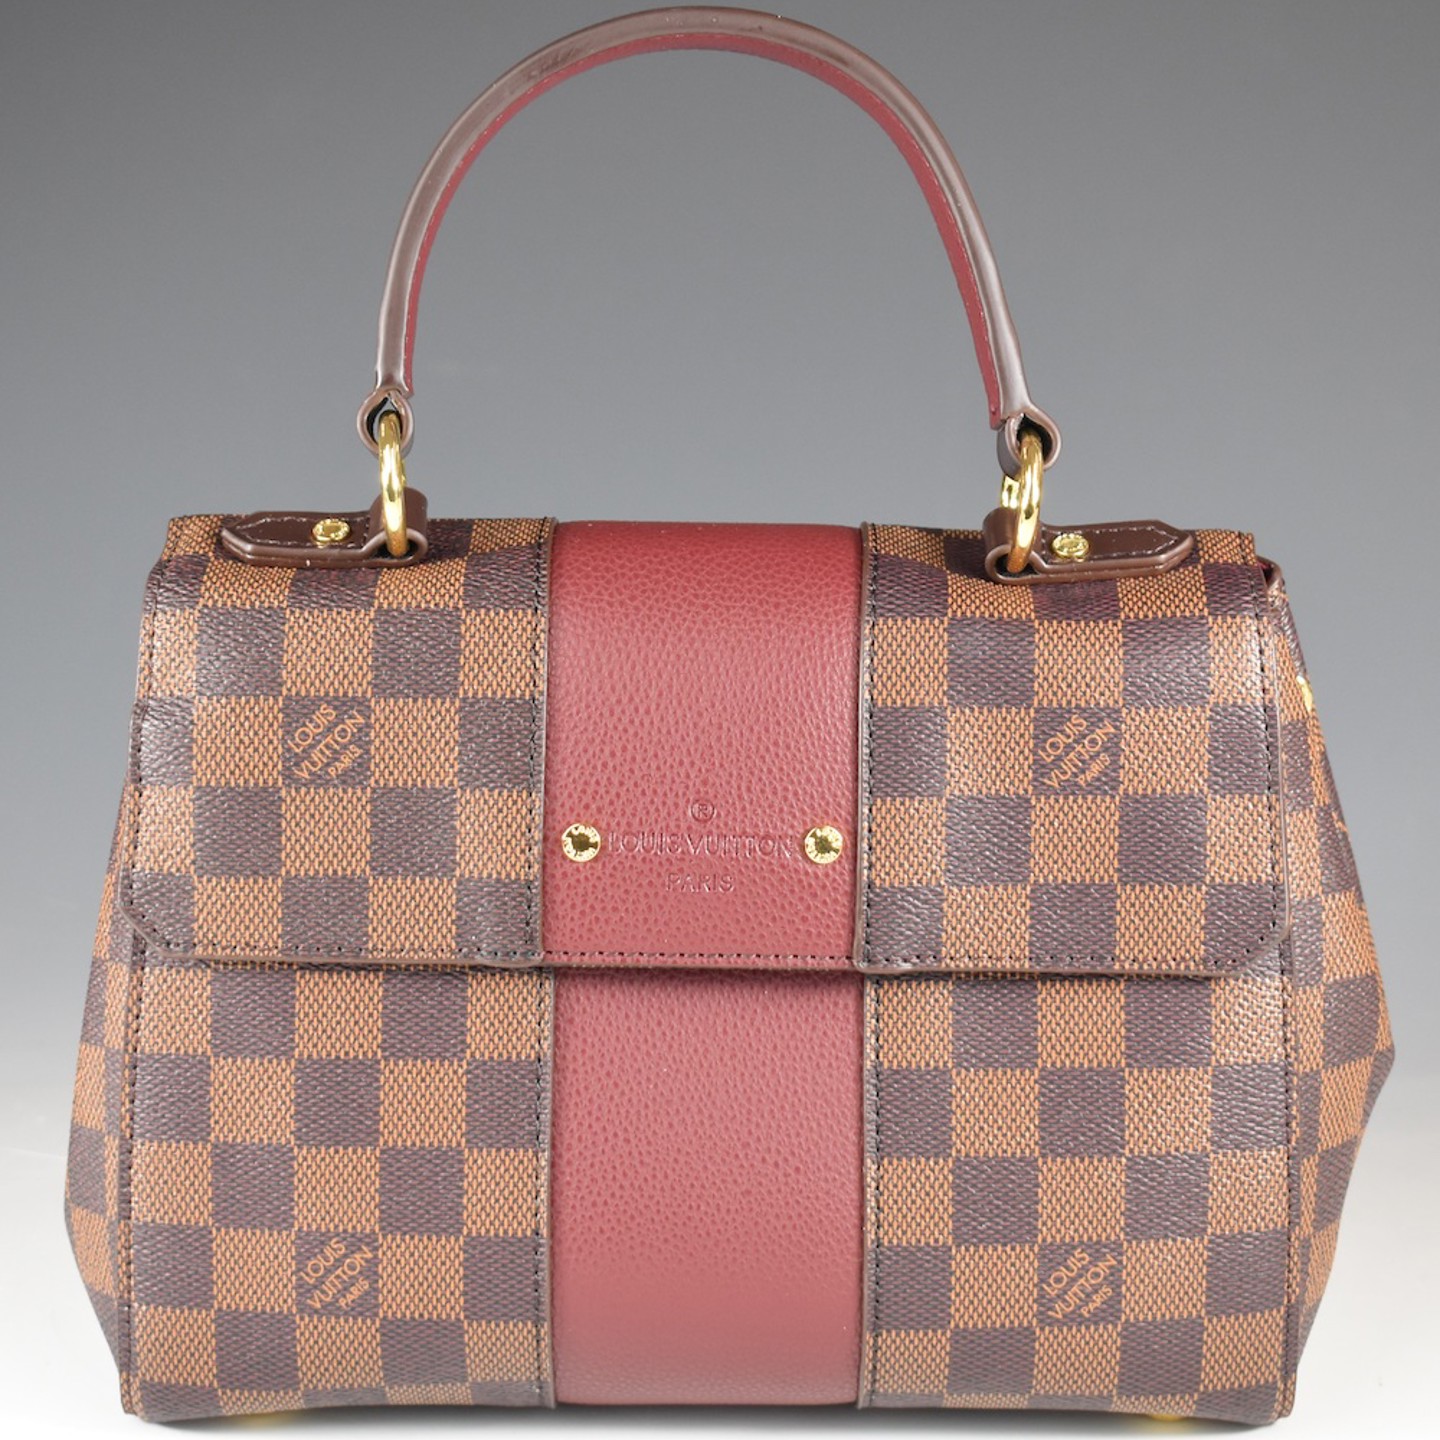 Louis Vuitton Bond Street Damier Ebene Canvas And Burgundy Leather Handbag, With Shoulder Strap And Original Louis Vuitton Dust Bag, Sold For Ś400